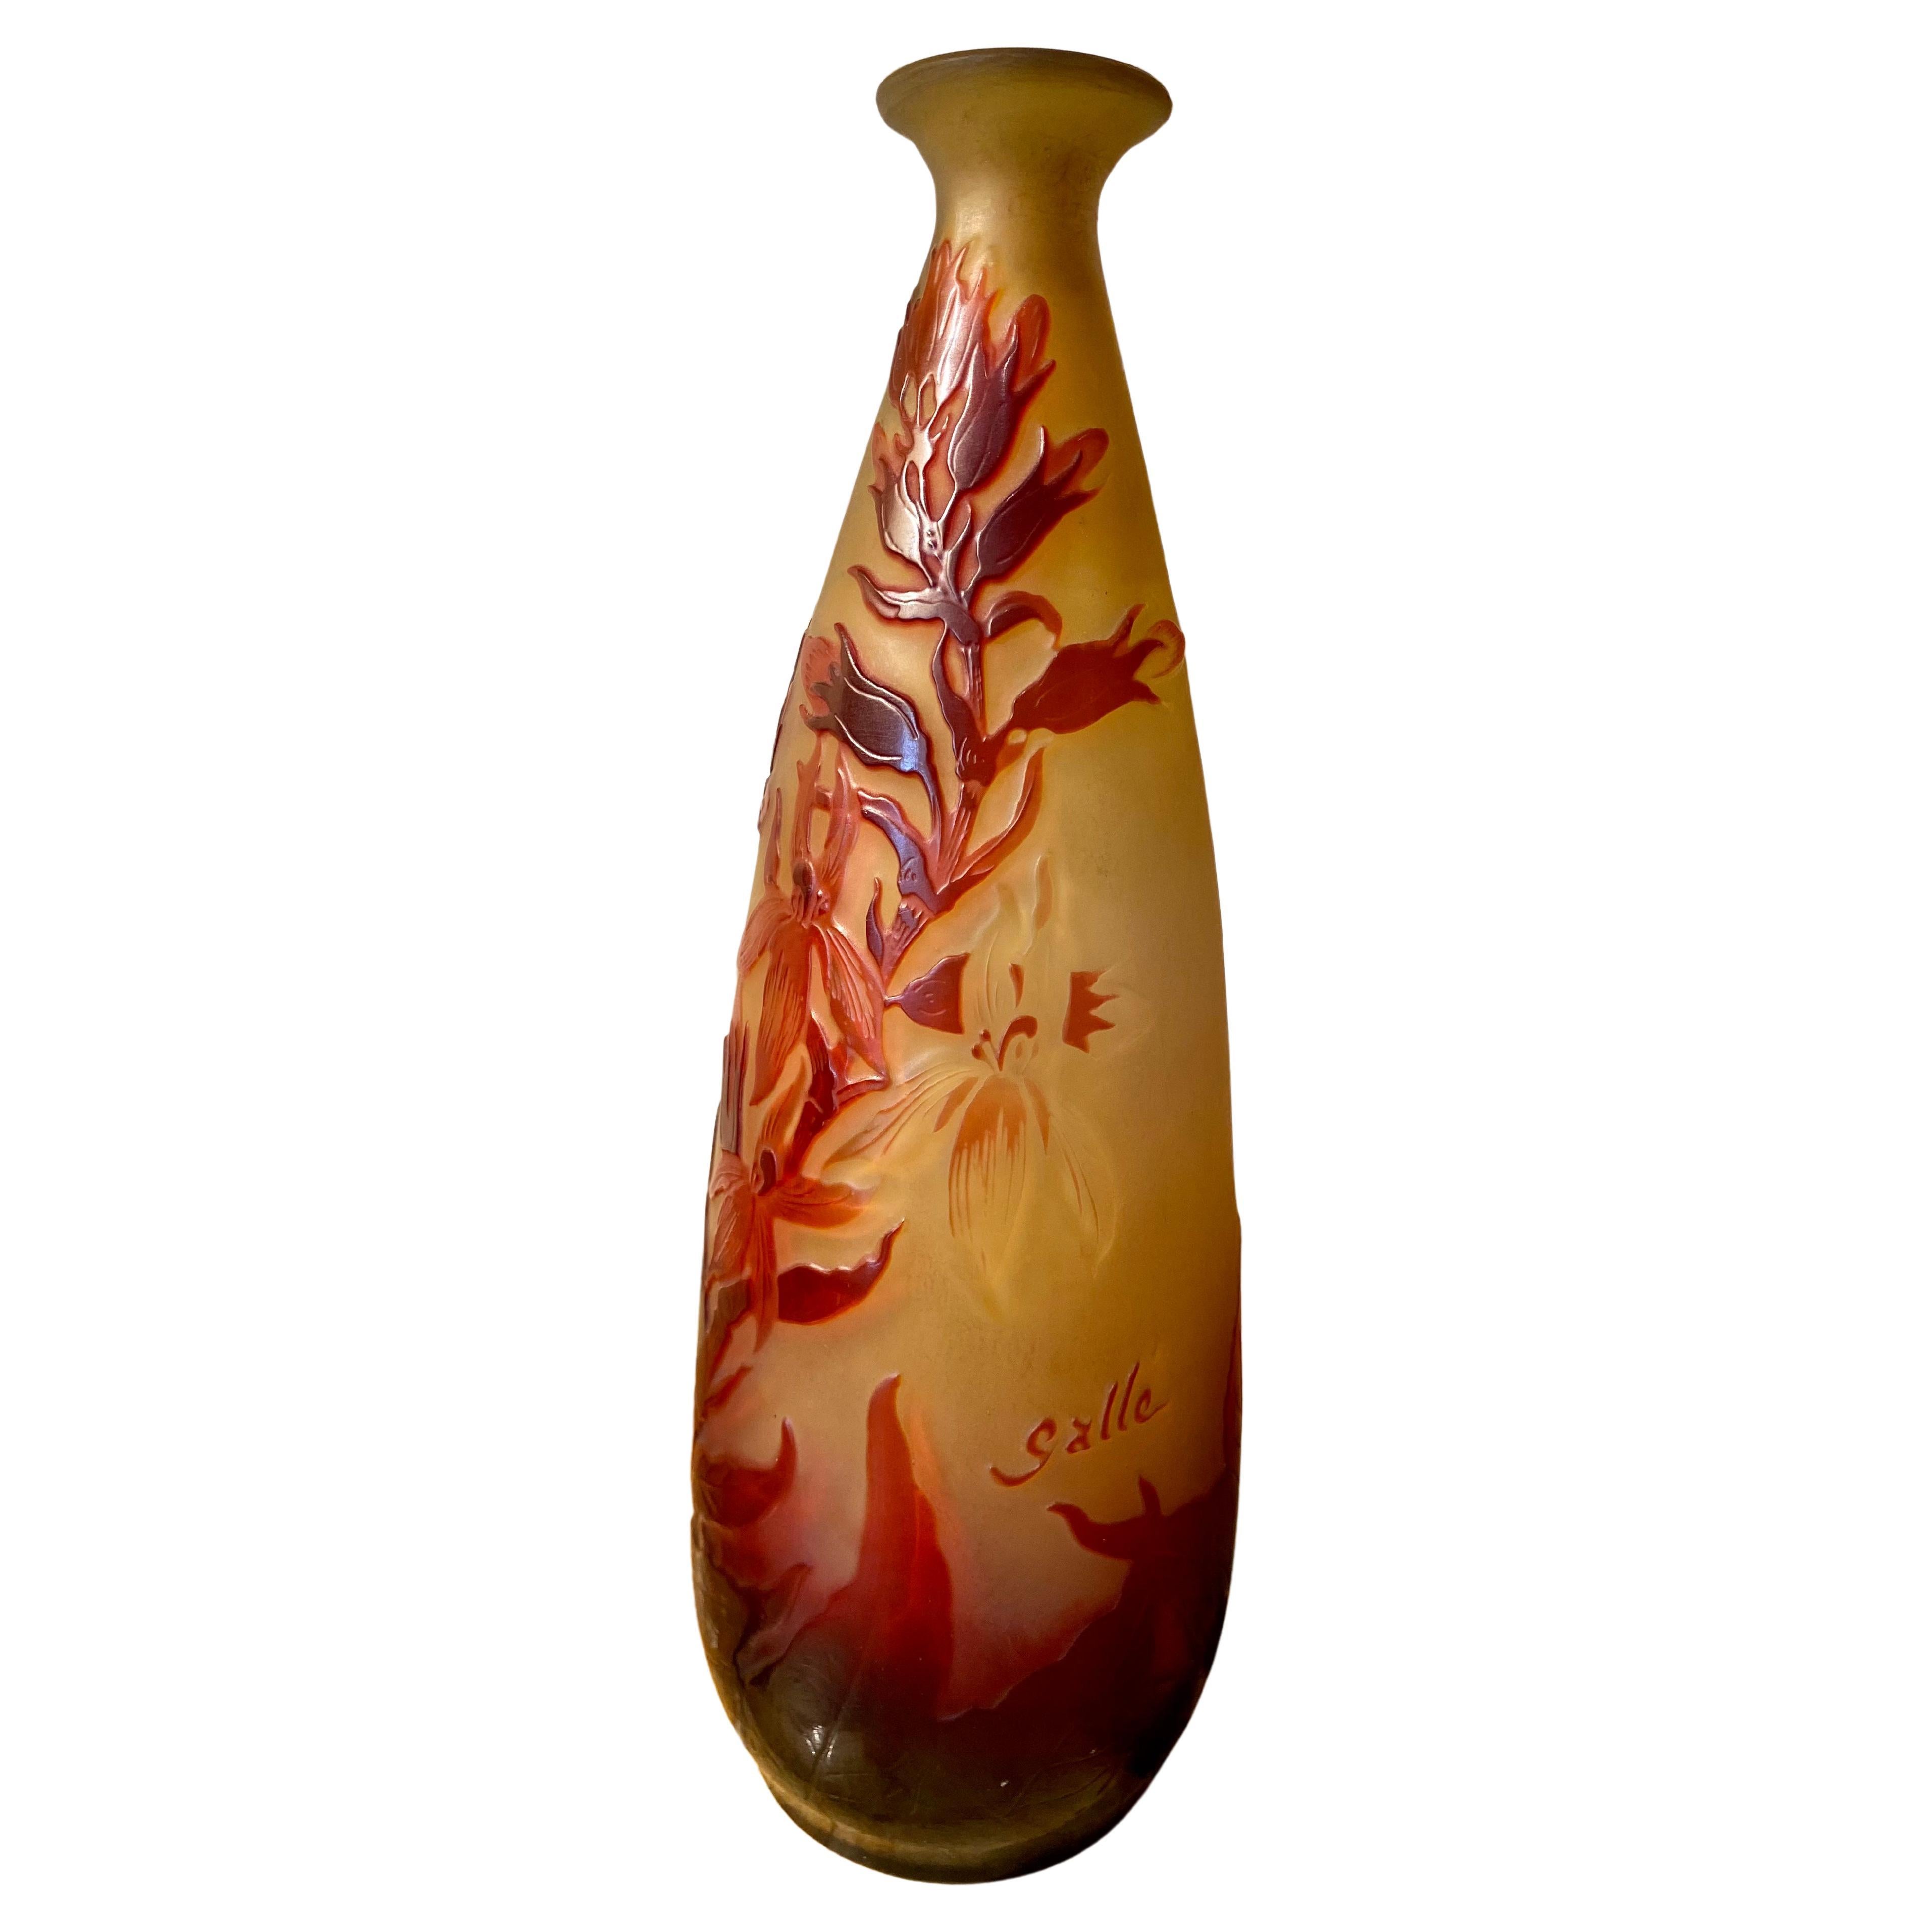 Emile Galle, Art Nouveau Style Elongated Piriform Vase with Irises 20th Century